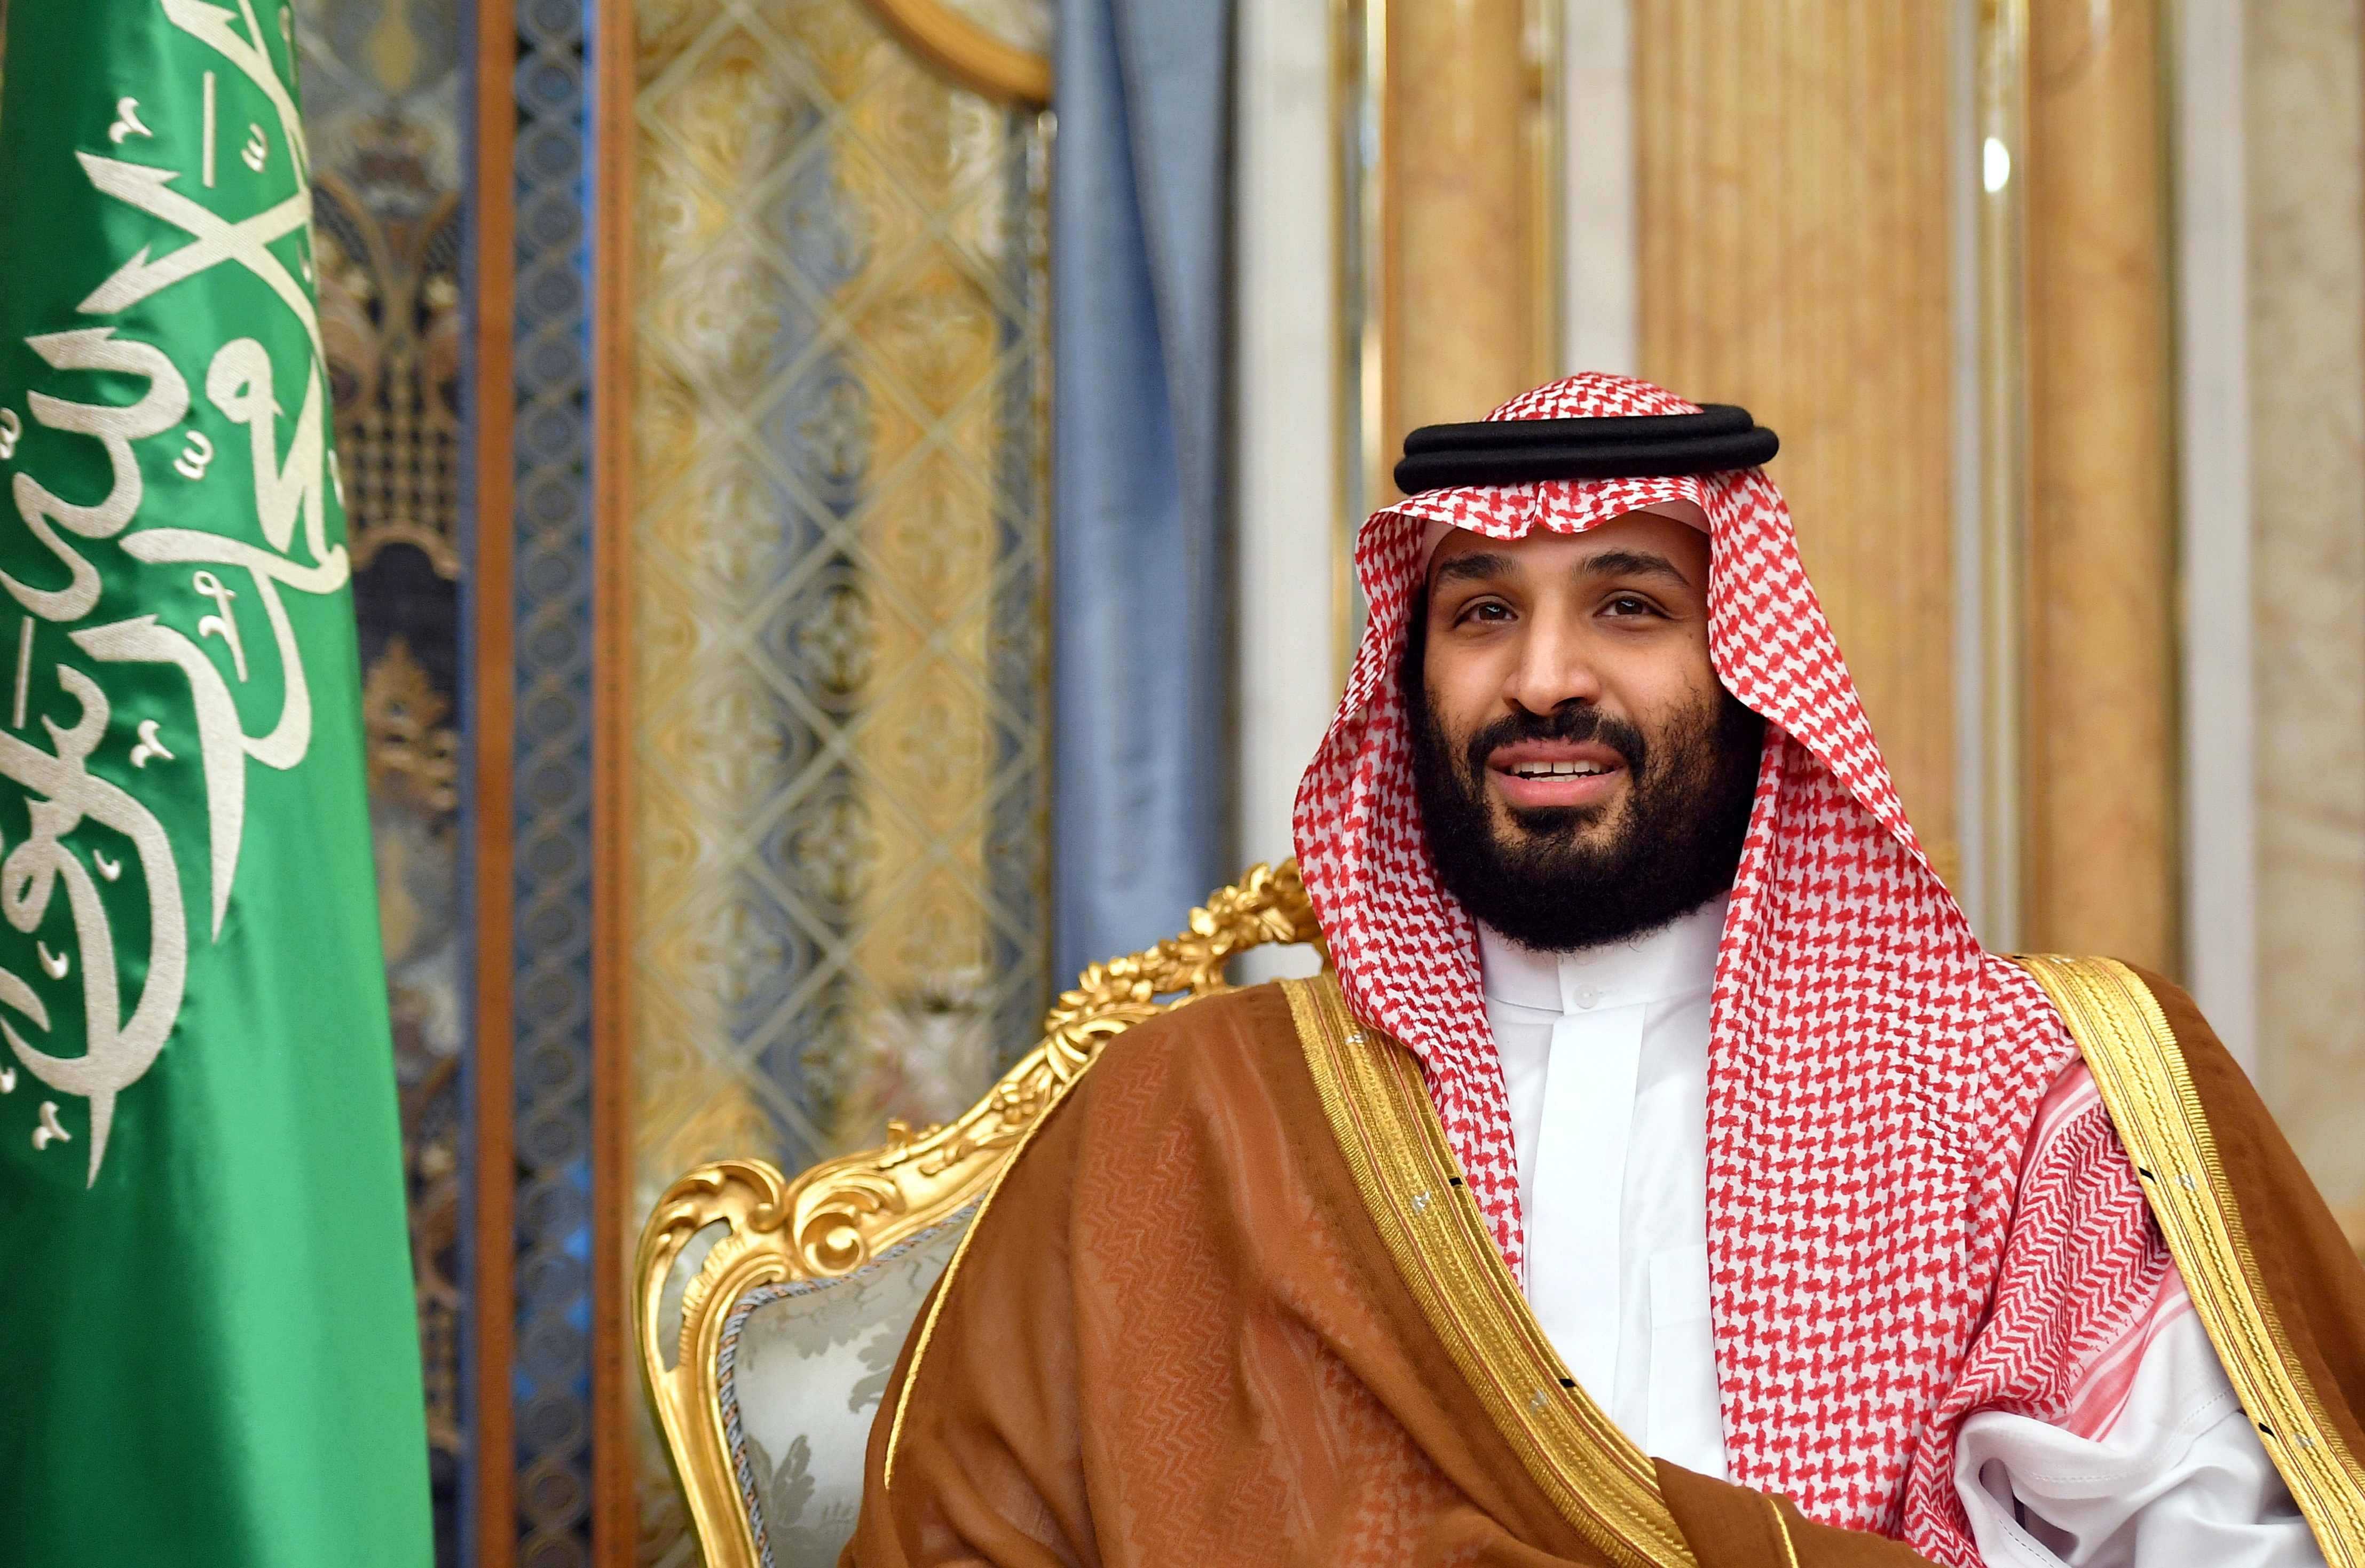 Saudi Arabia's Crown Prince Mohammed bin Salman attends a meeting with U.S. Secretary of State Mike Pompeo in Jeddah, Saudi Arabia, September 18, 2019. Mandel Ngan/Pool via REUTERS